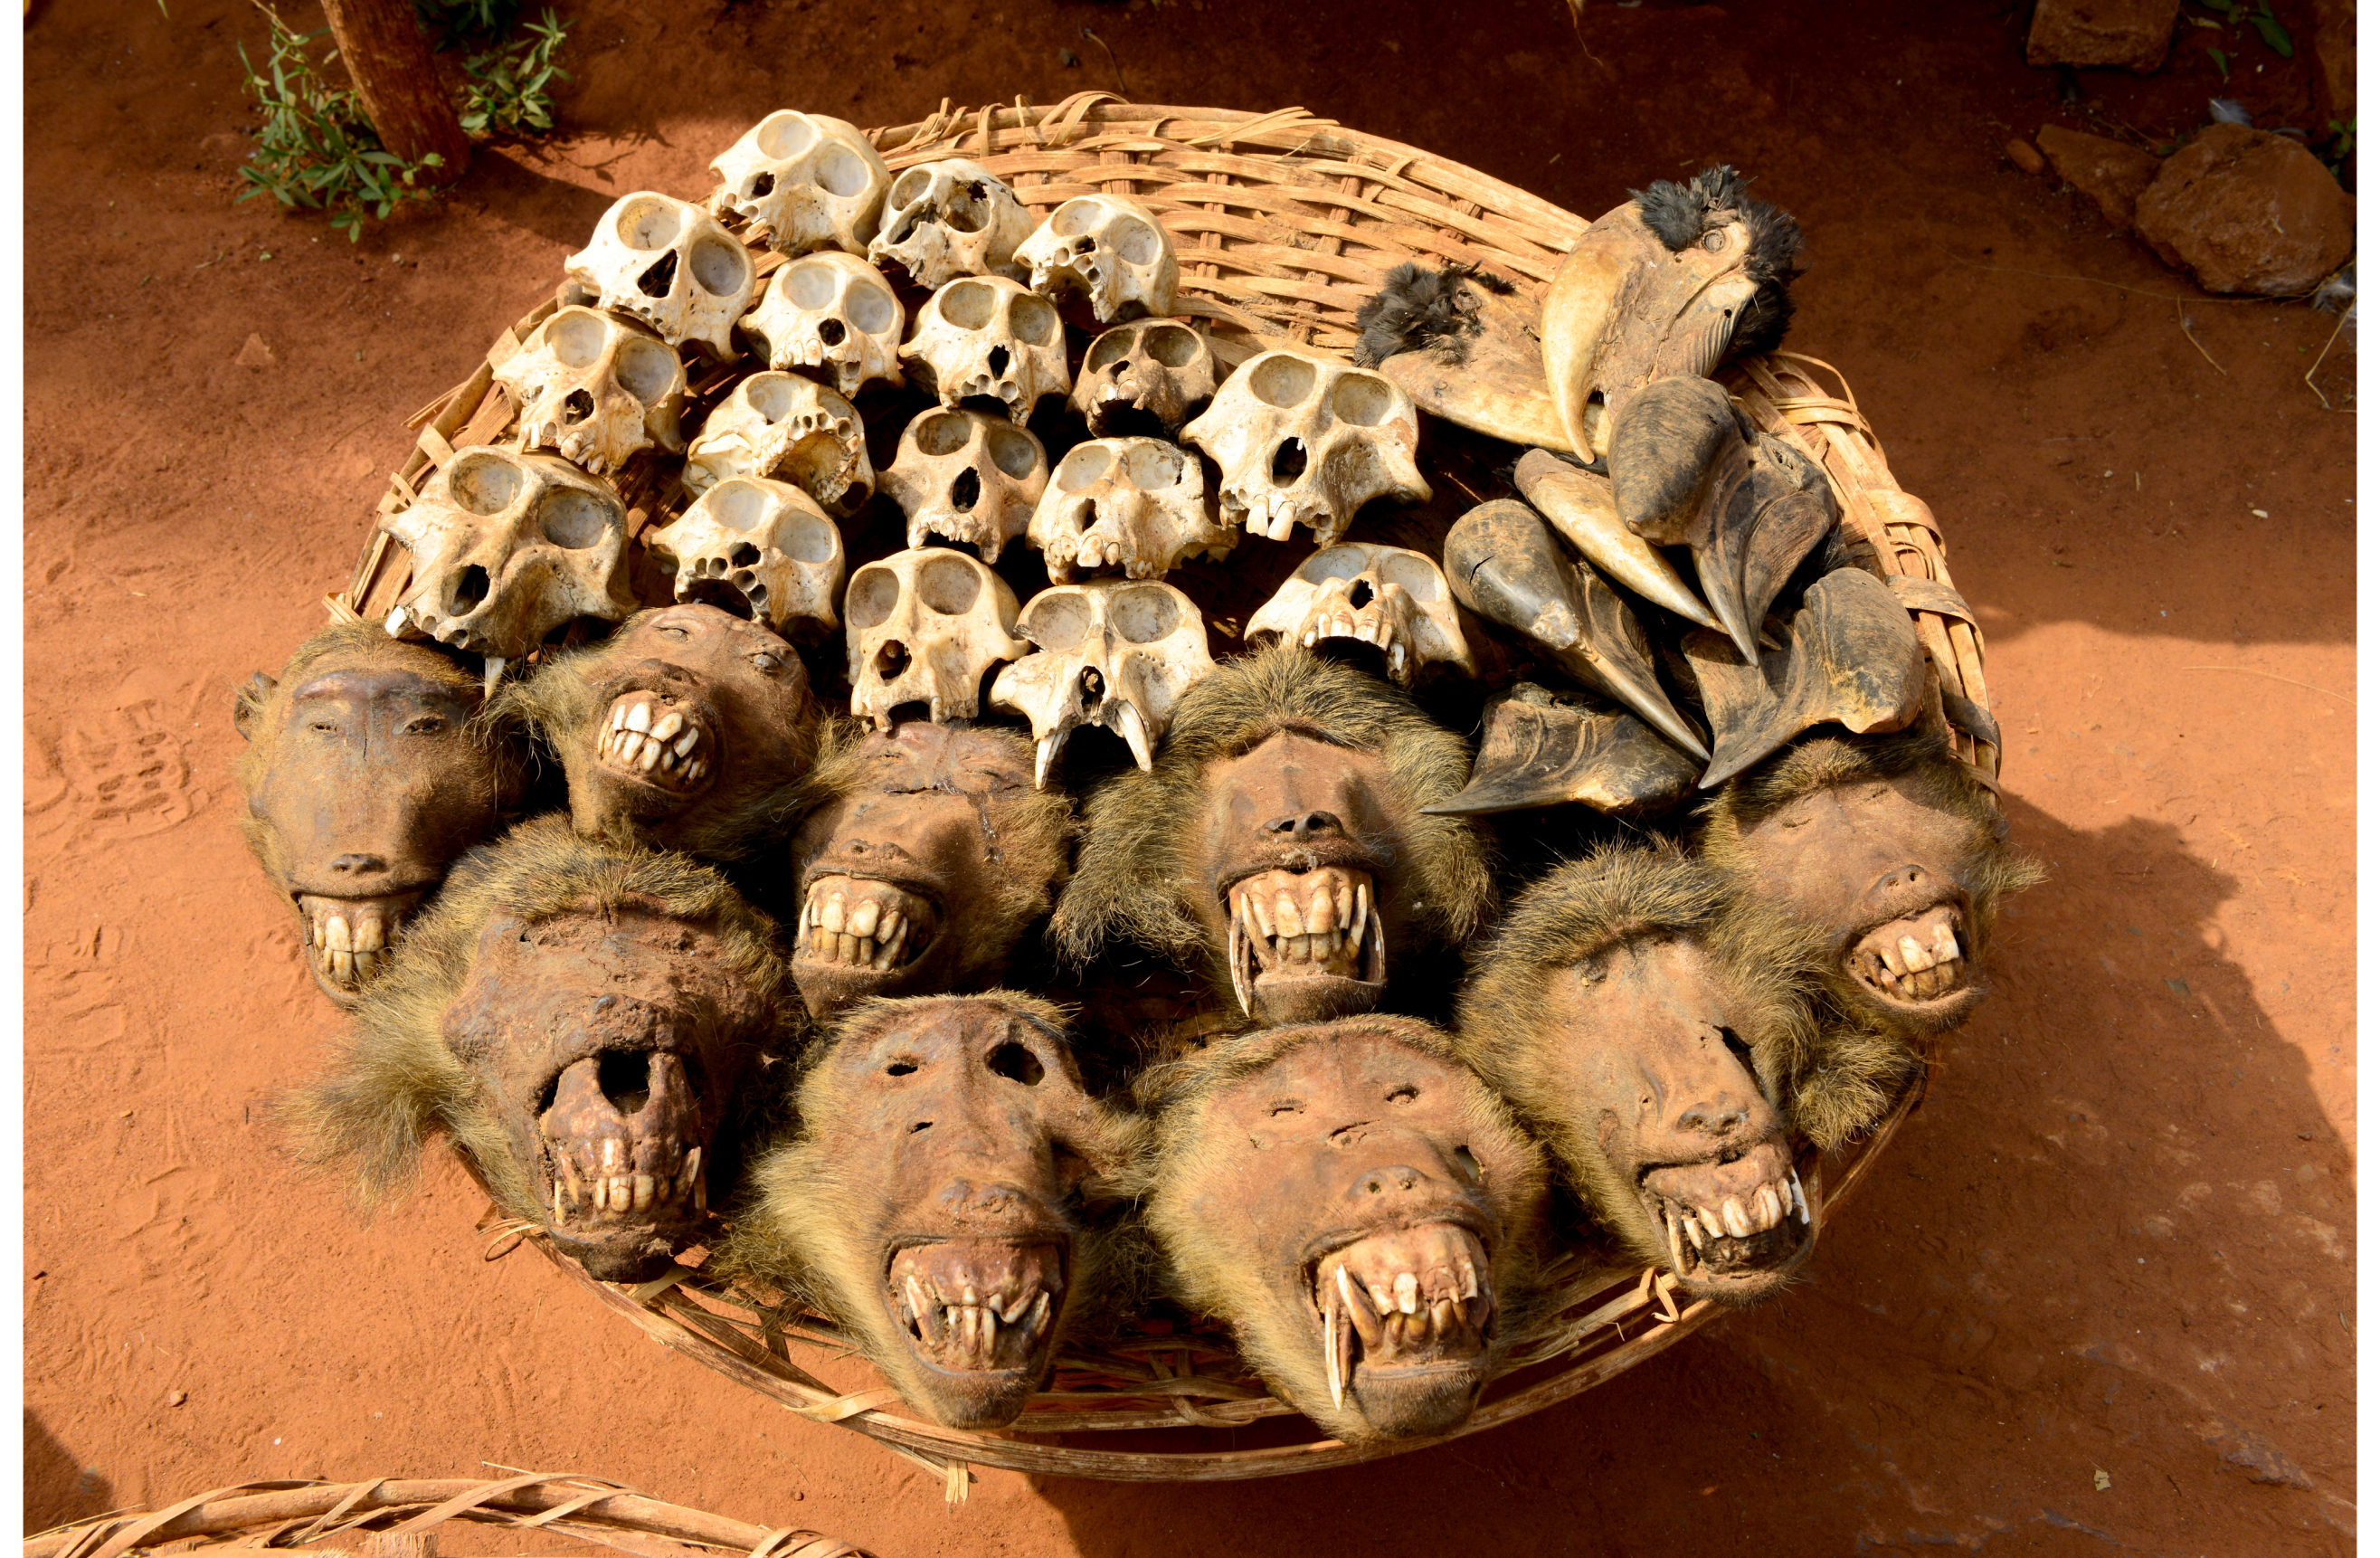 A basket of baboon skulls at a market.